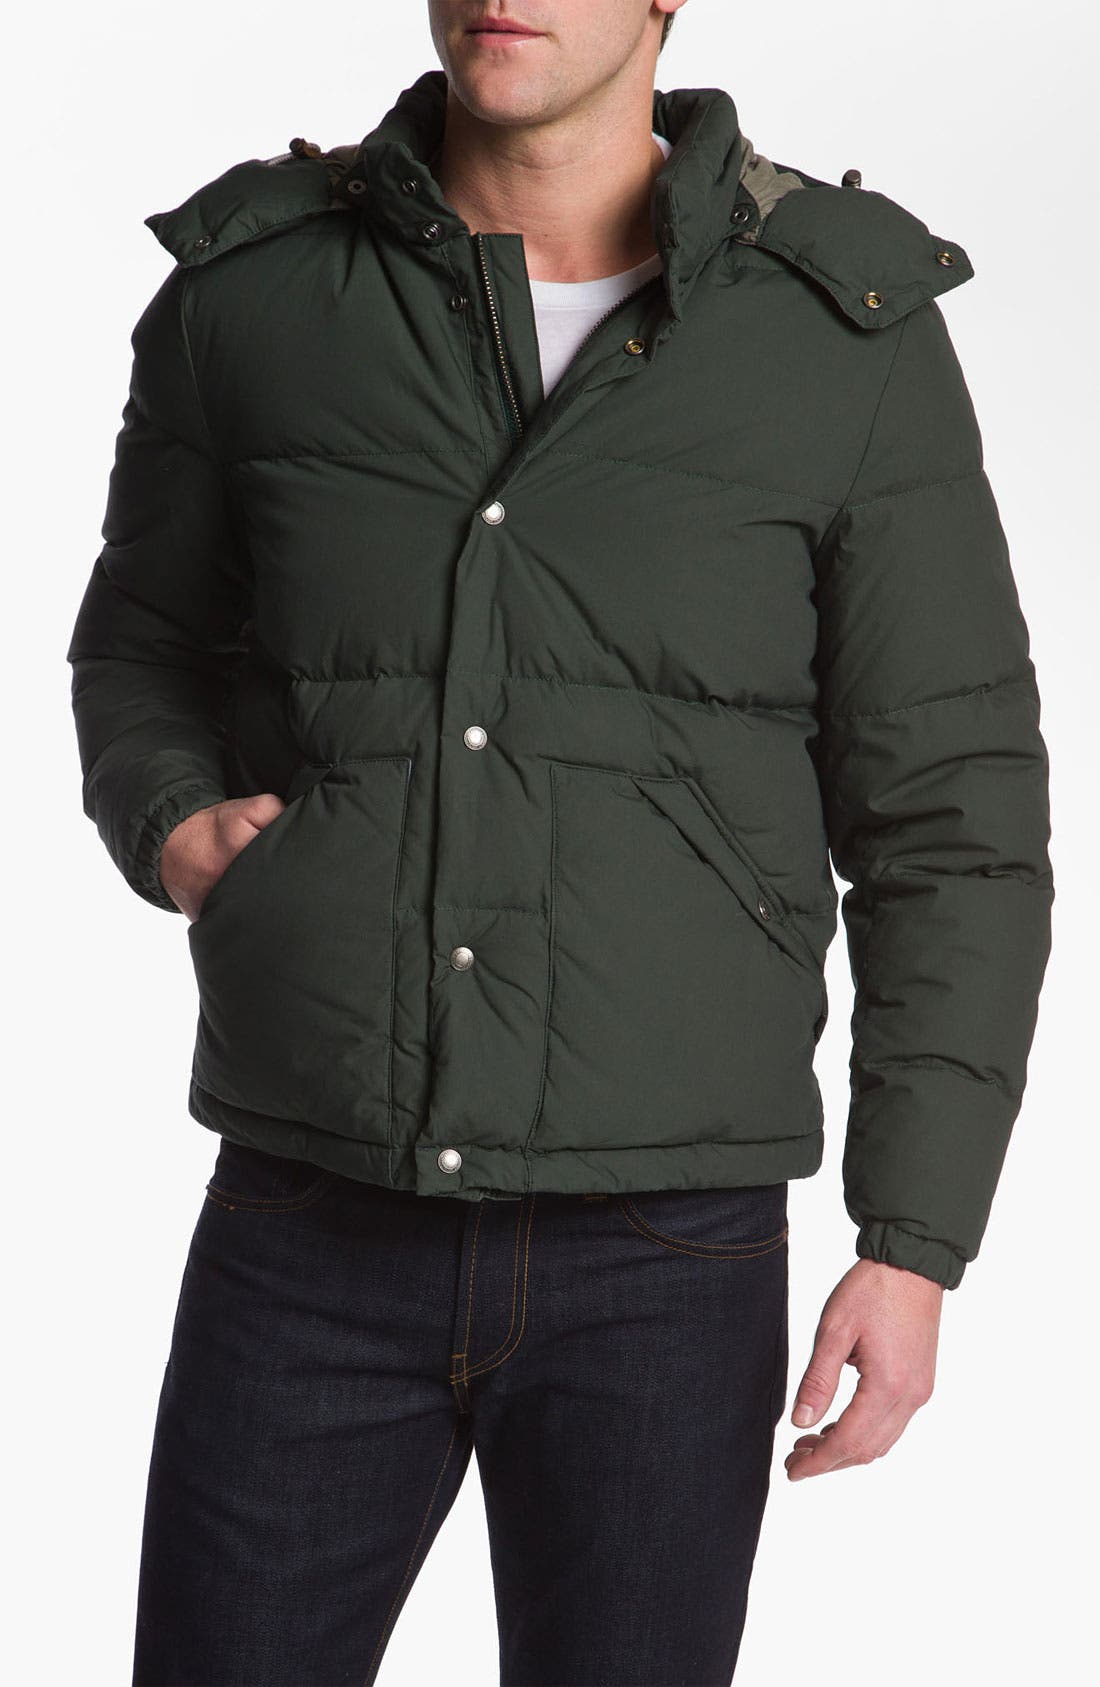 sierra supreme jacket